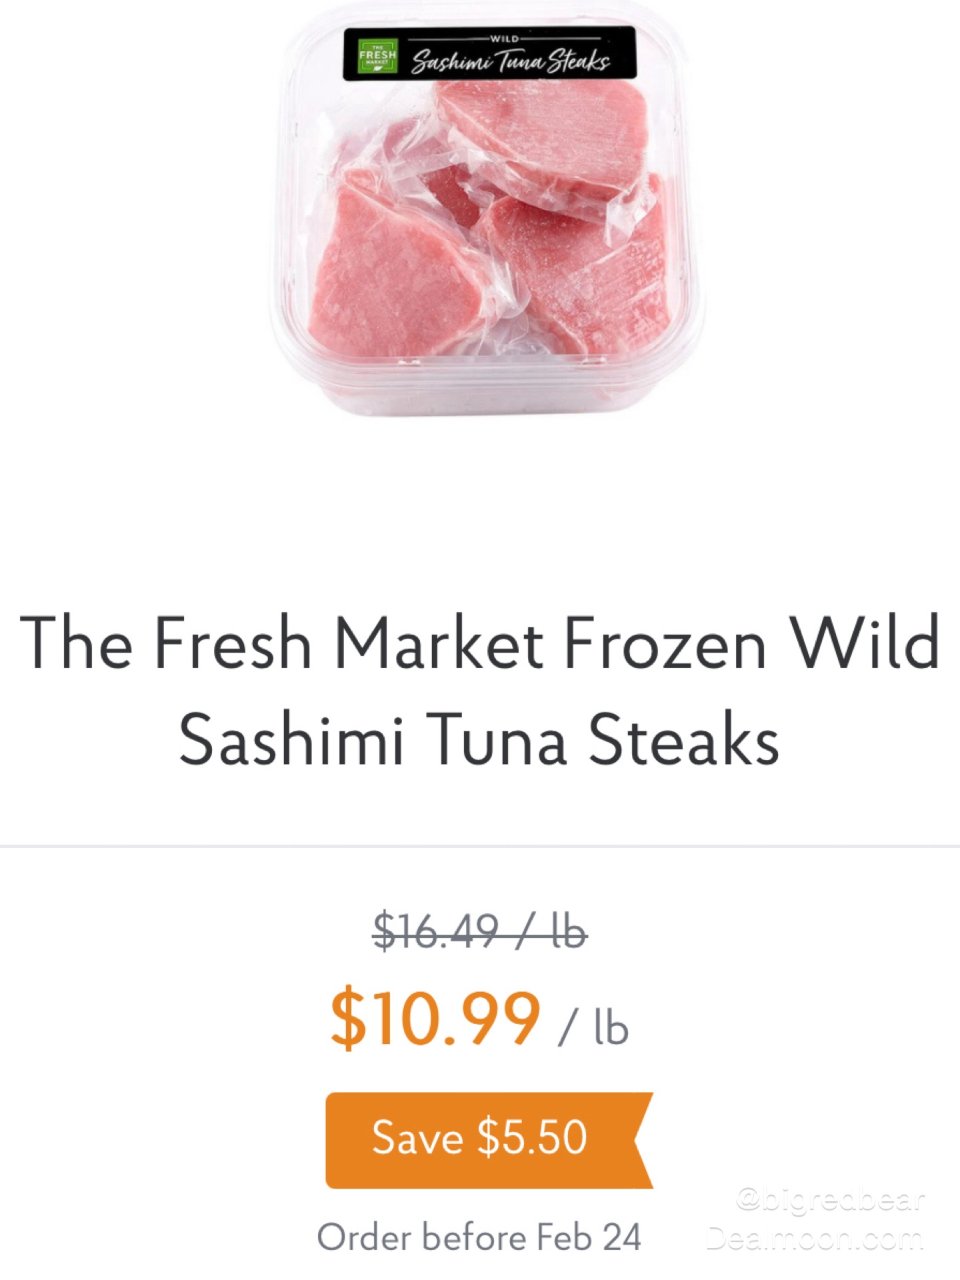 解锁日式料理之spicy tuna sa...